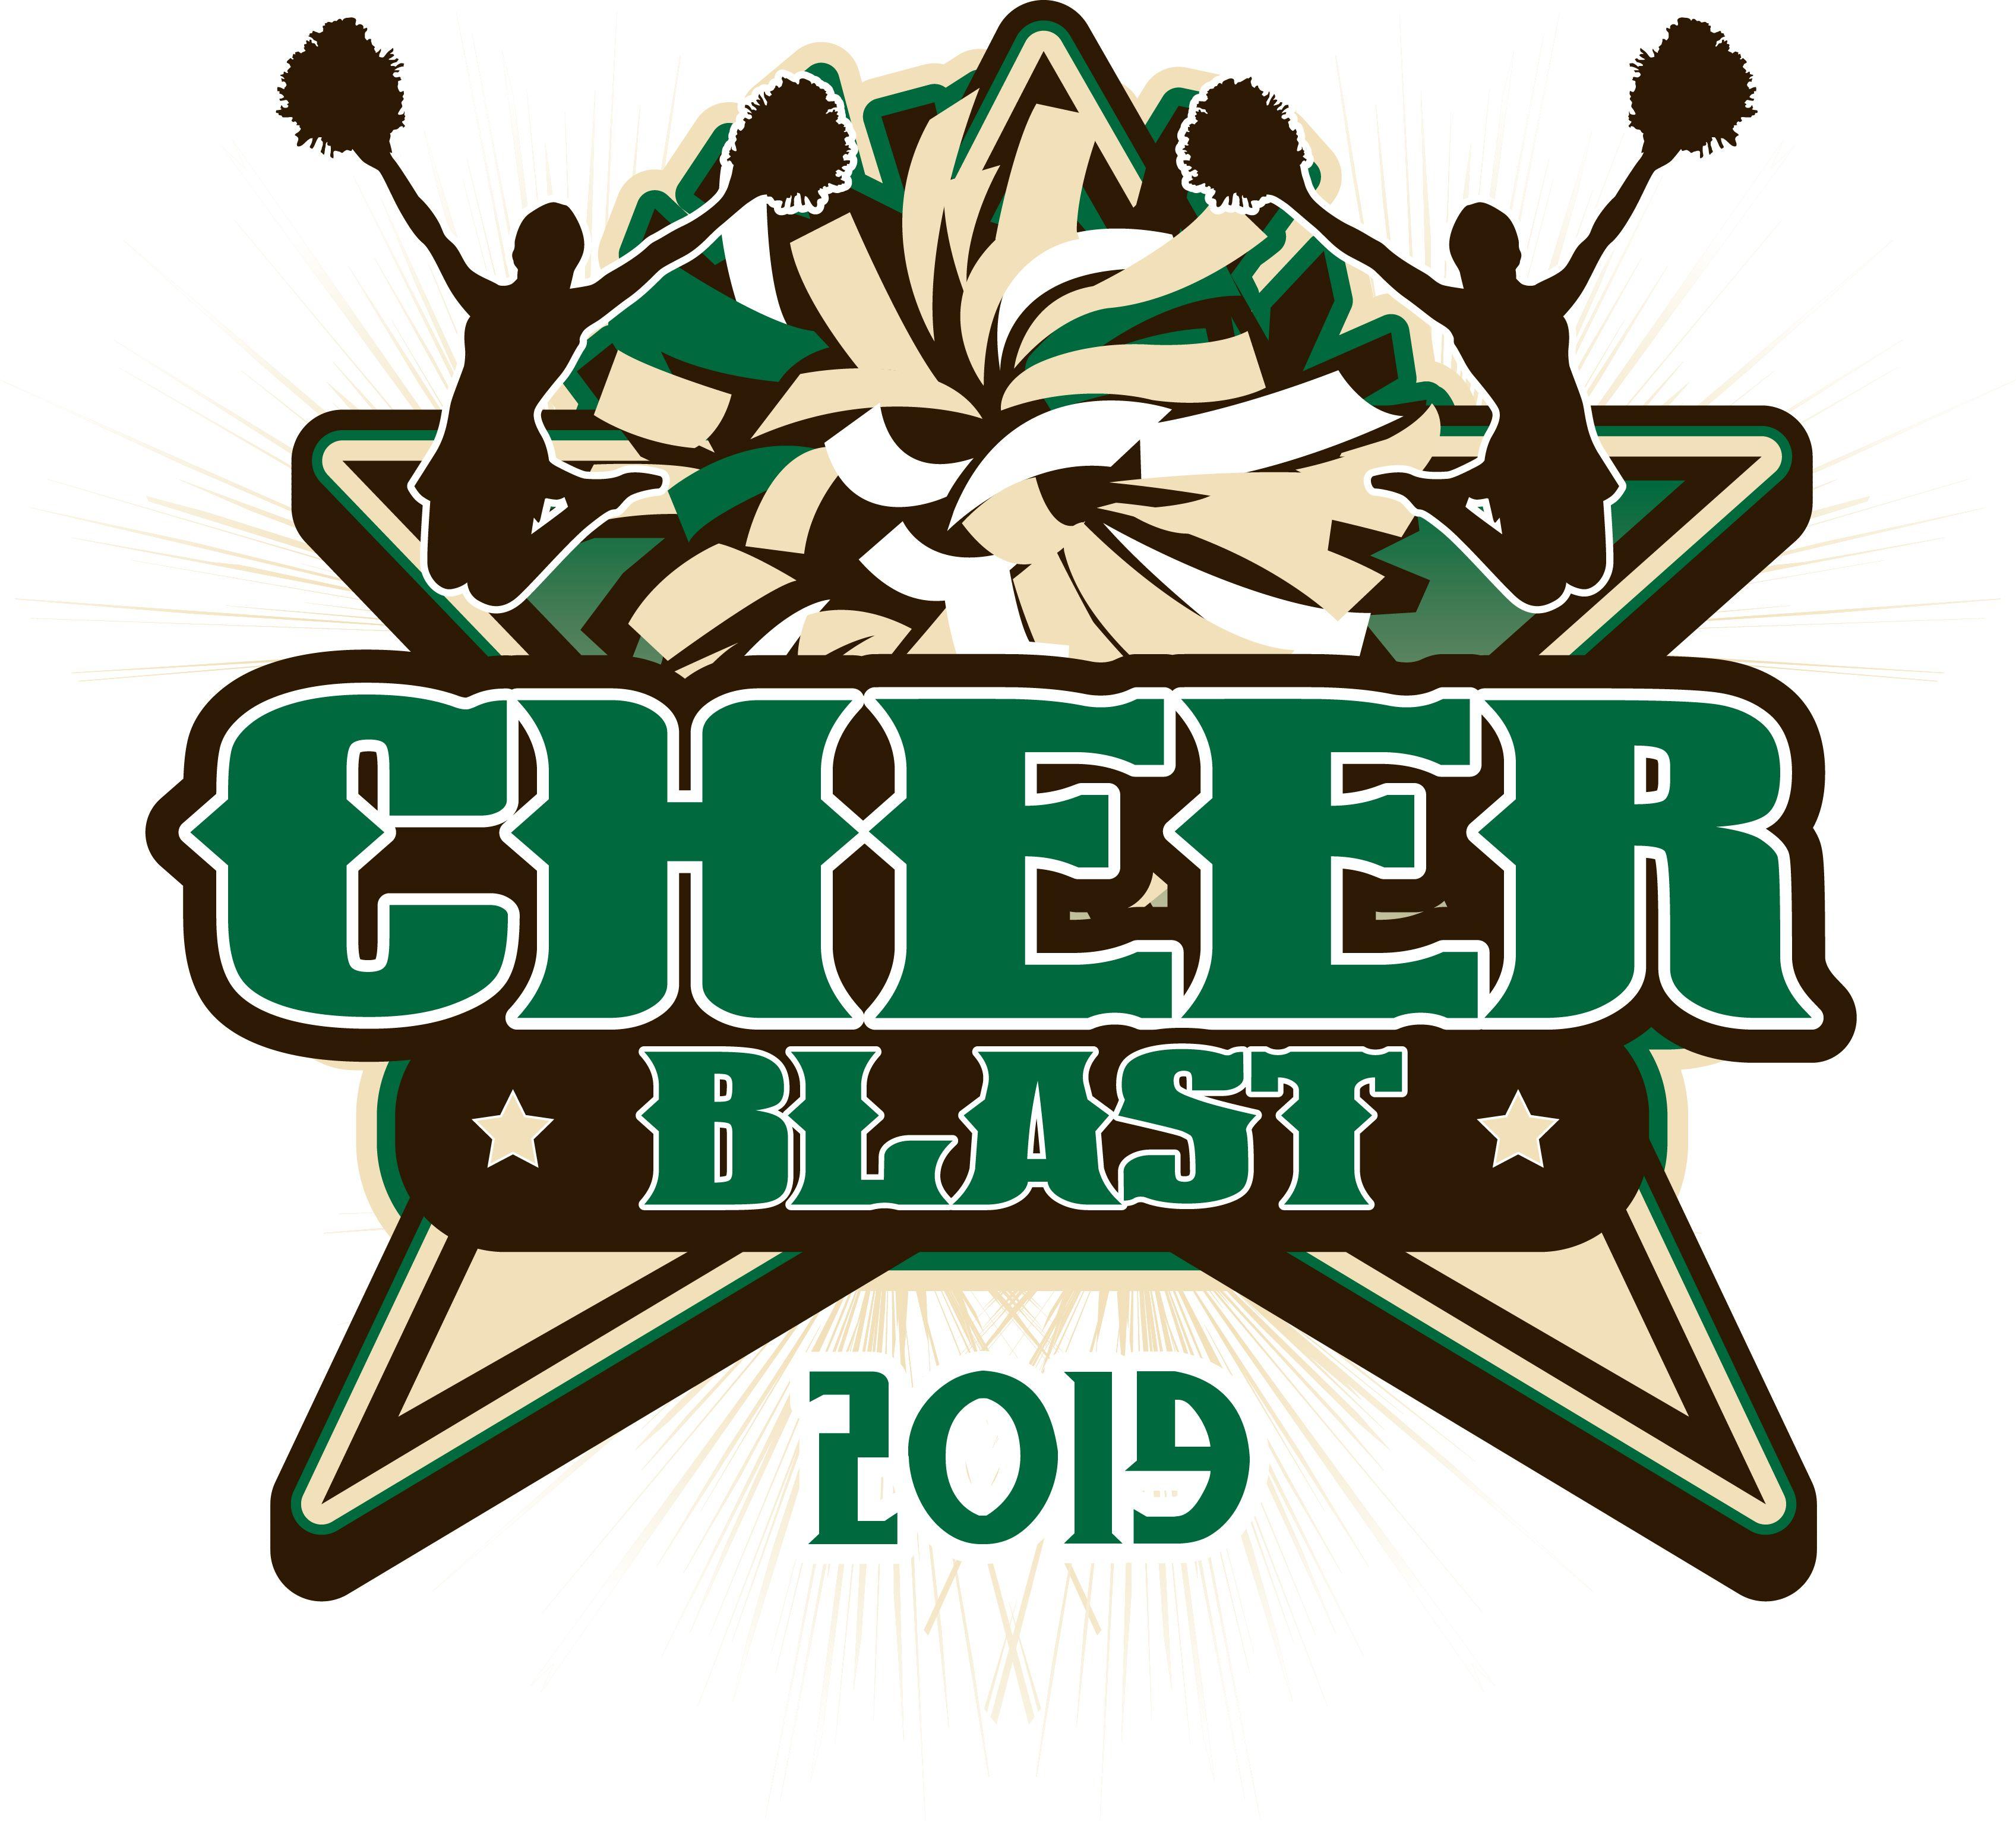 Cheer Logo - CHEER BLAST 2019 T-shirt vector logo design for print | URARTSTUDIO ...